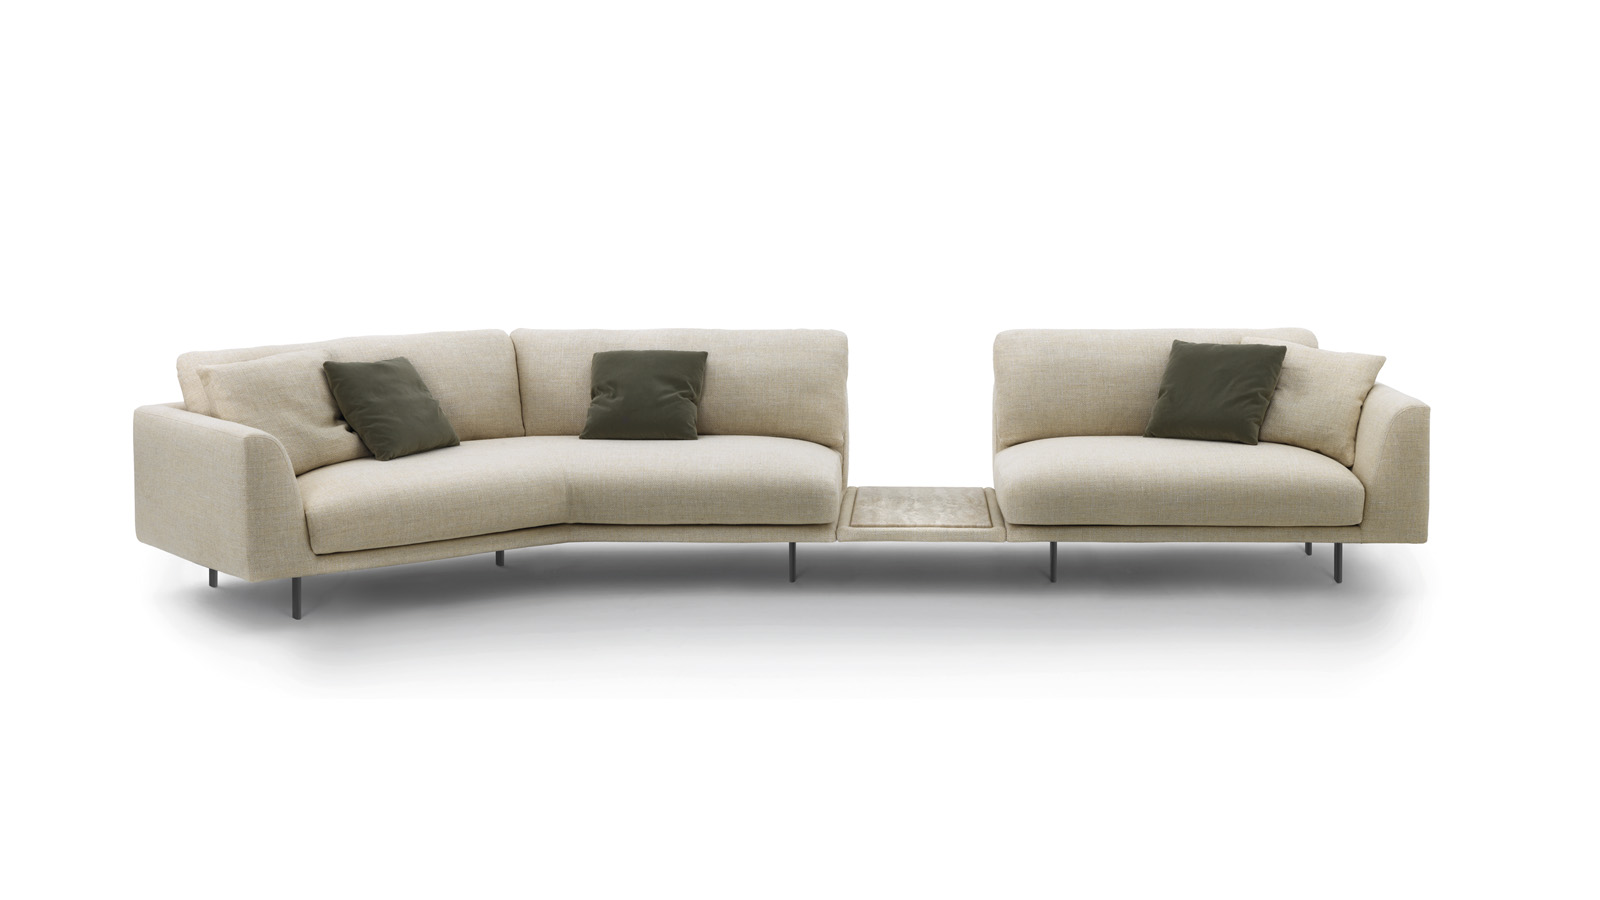 Arflex_Bel Air sofa